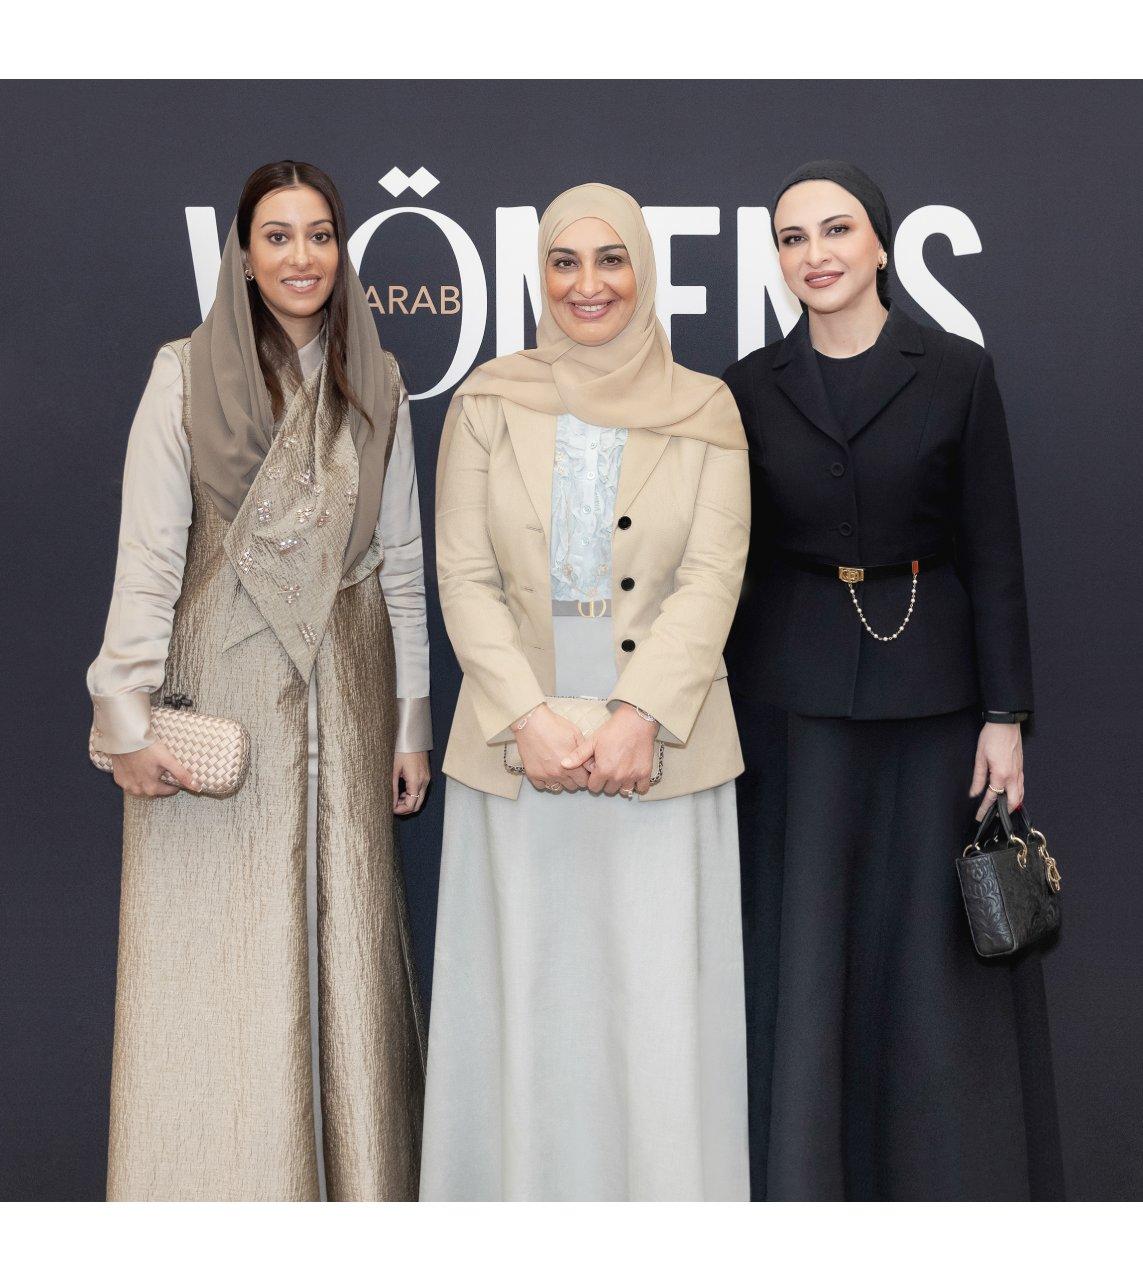 Arab Women's Summit